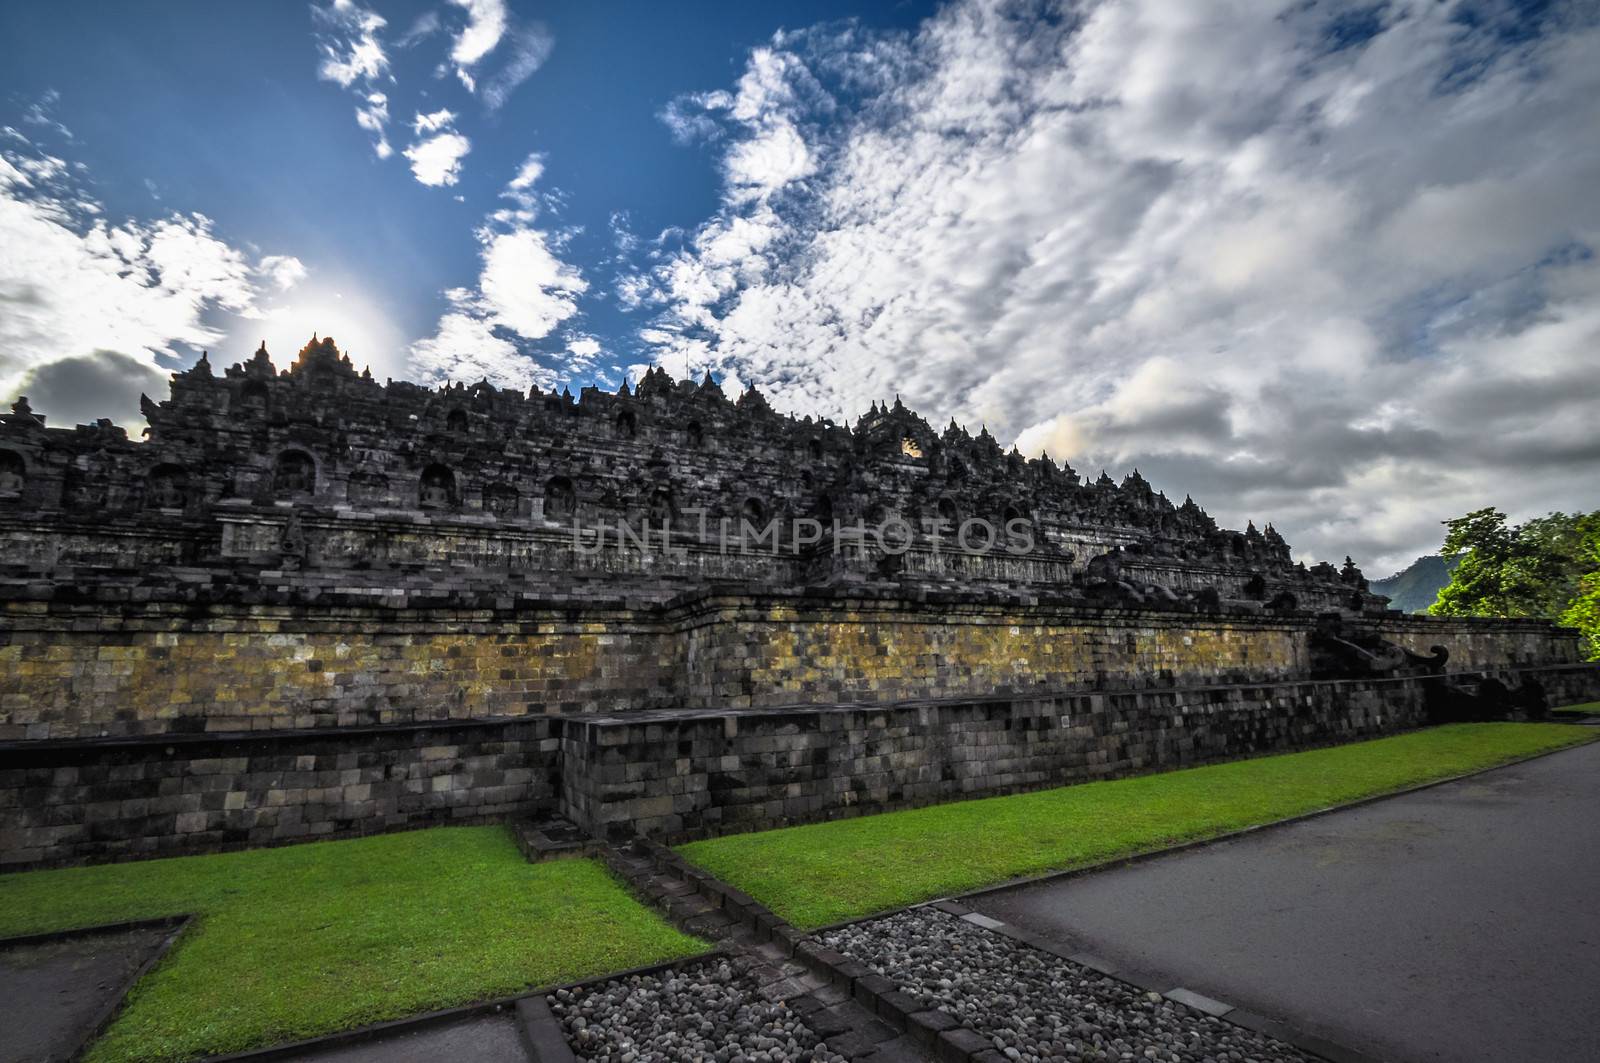 Buddist temple Borobudur complex in Yogjakarta in Java by weltreisendertj